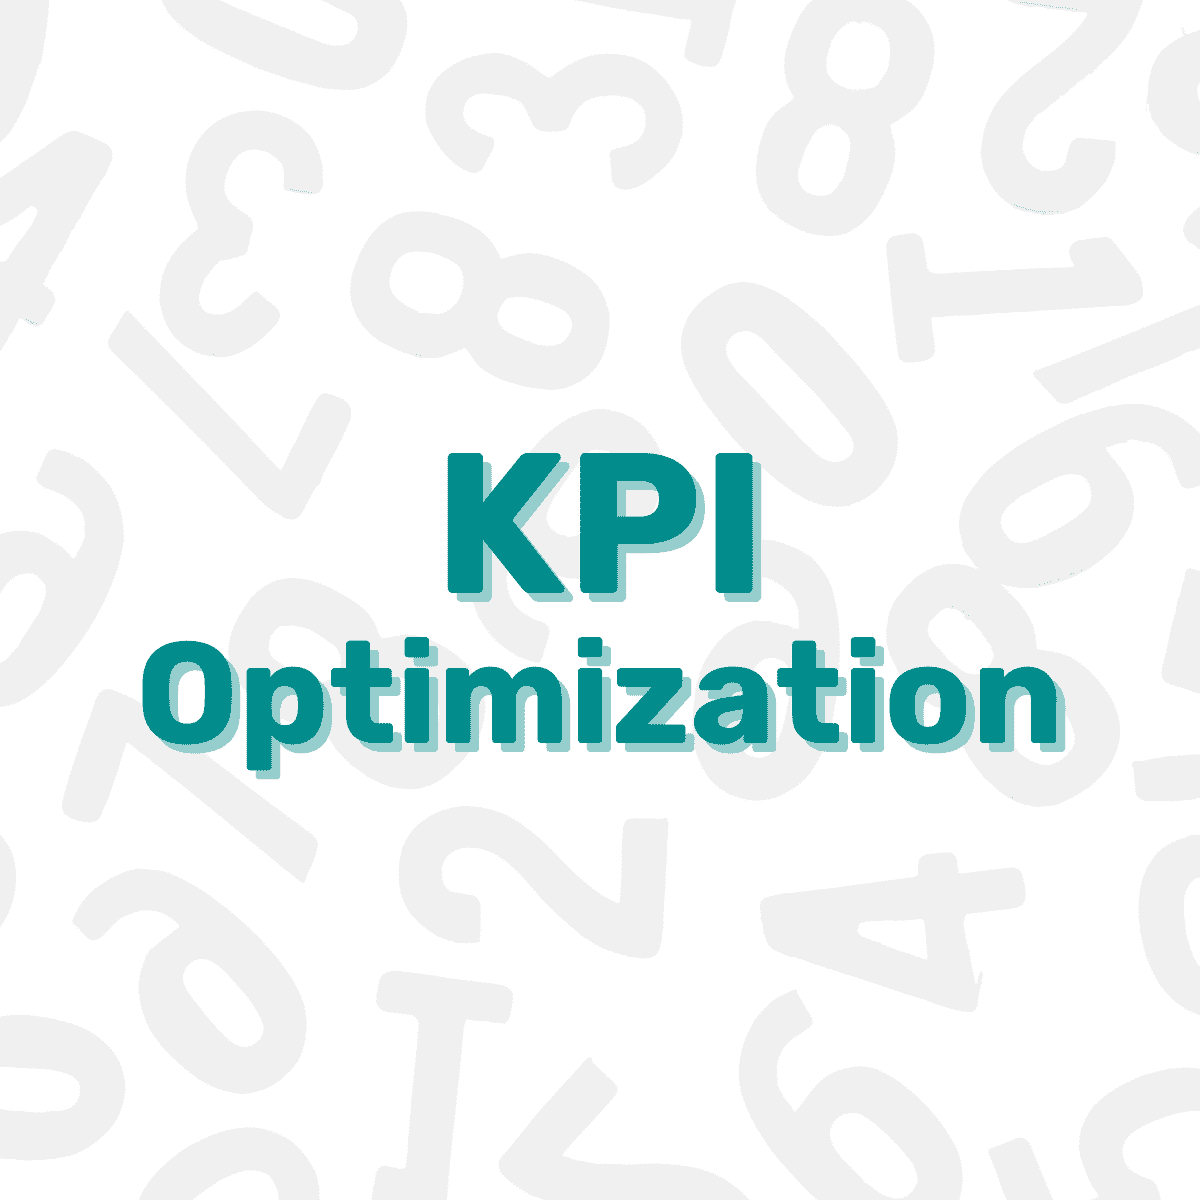 KPI optimization